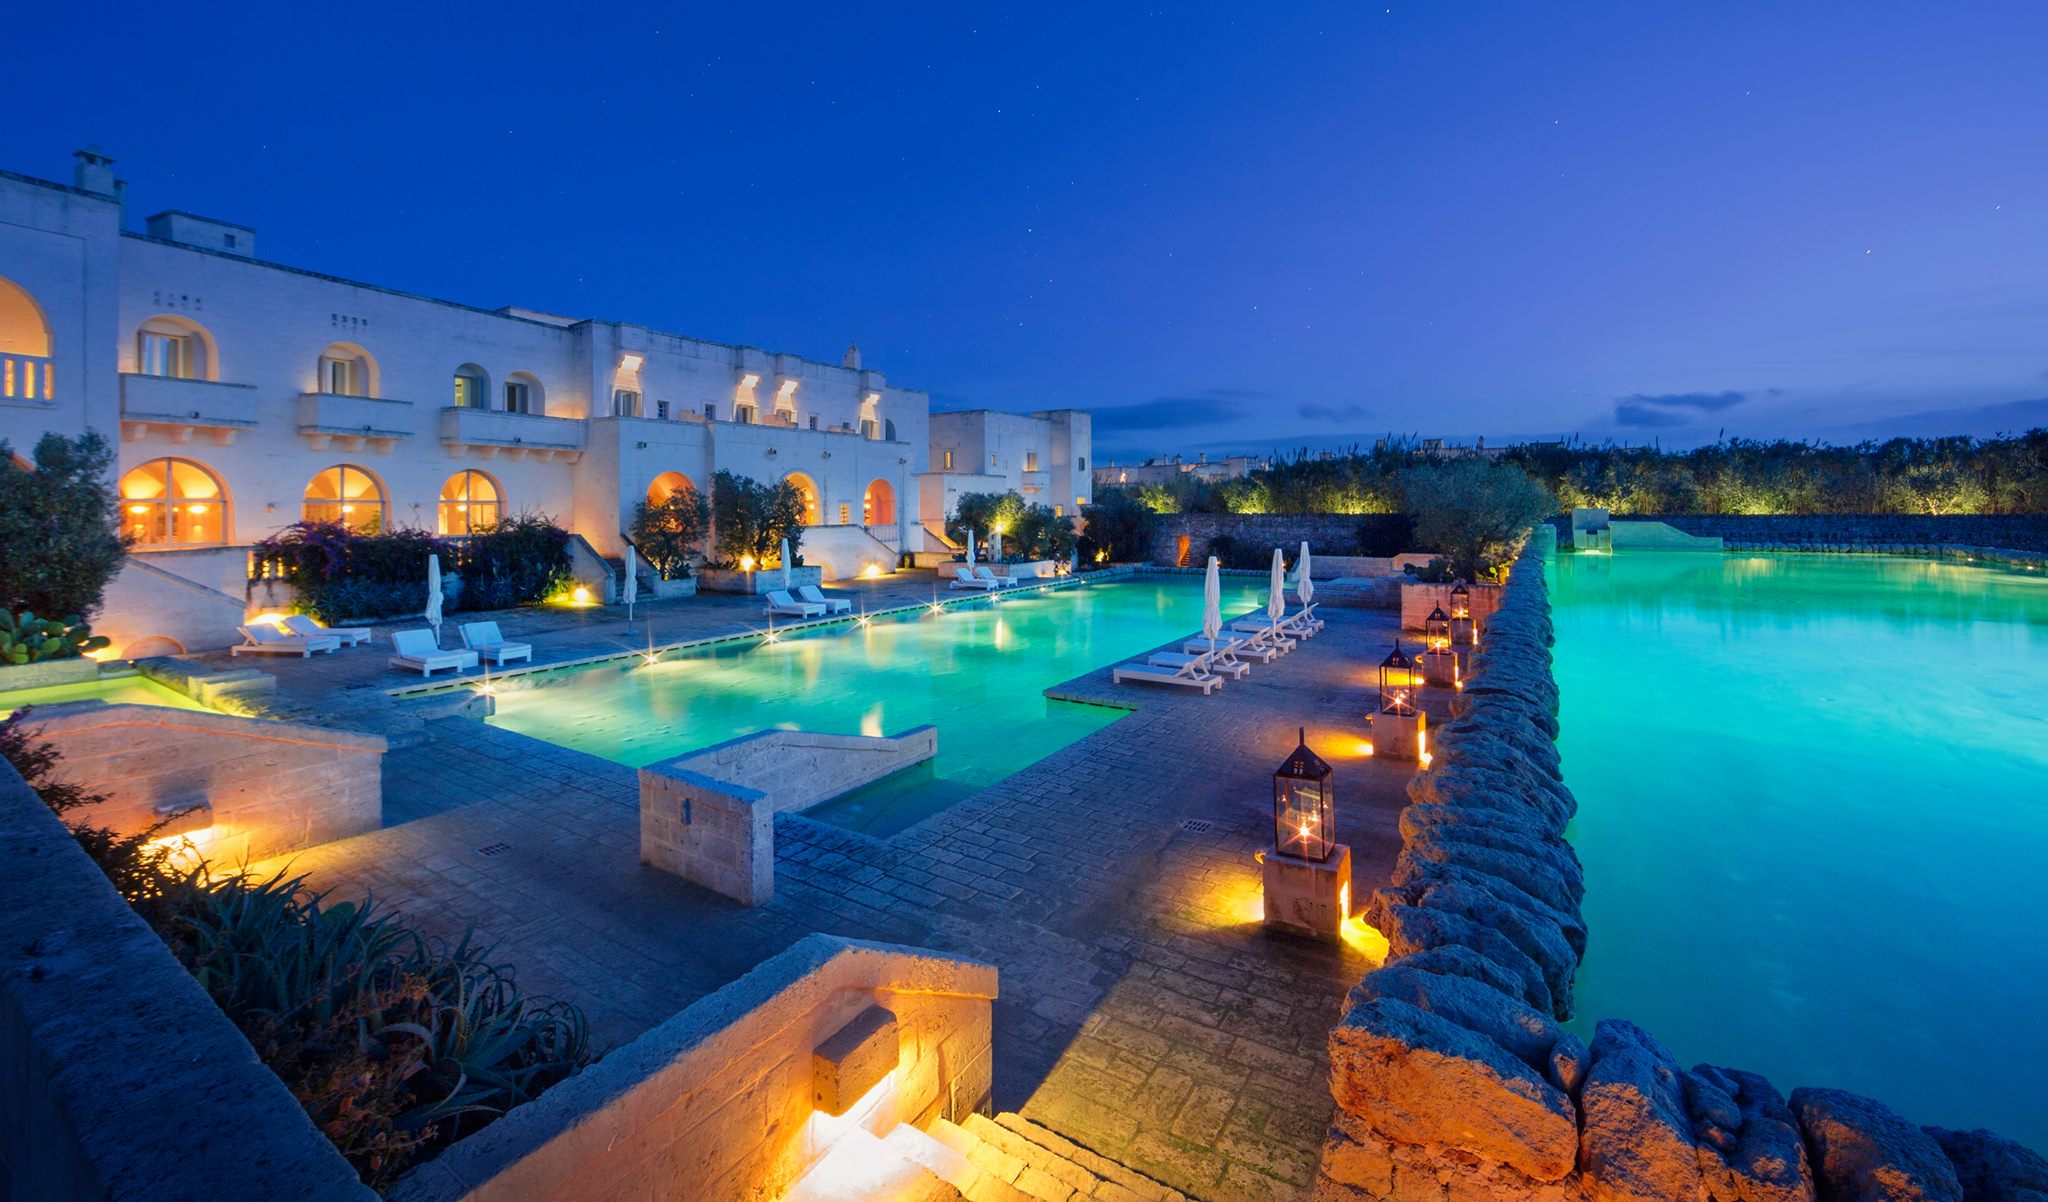 Borgo  Egnazia hotel pool in Italy